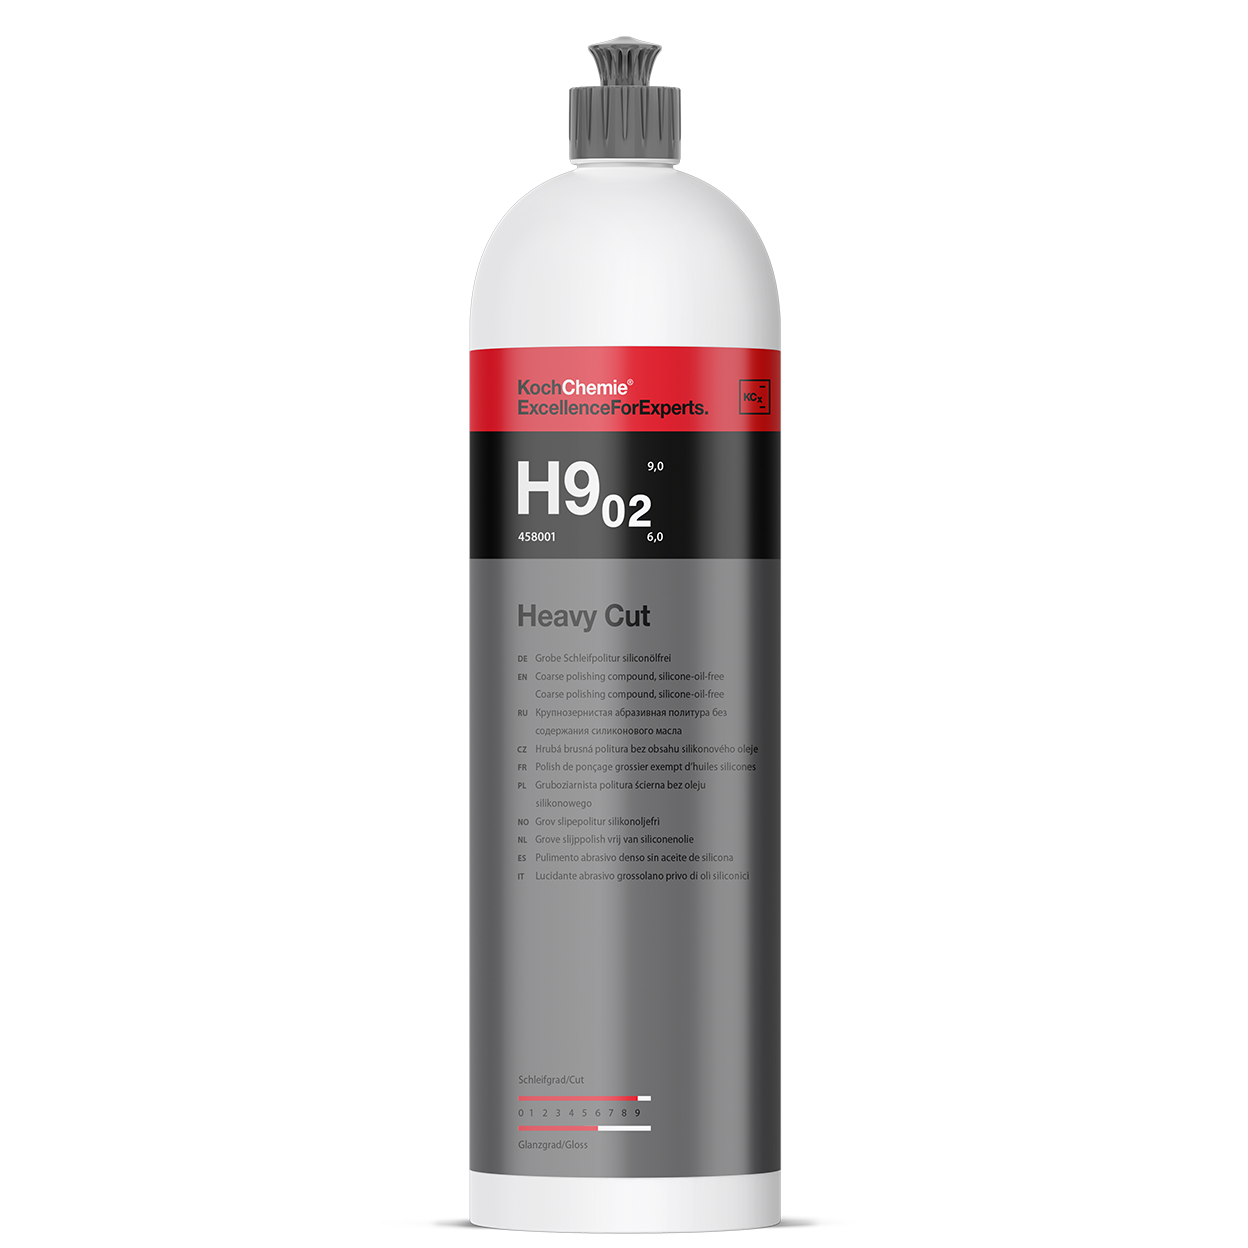 Koch Chemie Heavy Cut H9.01 silicone-oil-free 1.0 liter - coarse grinding polish